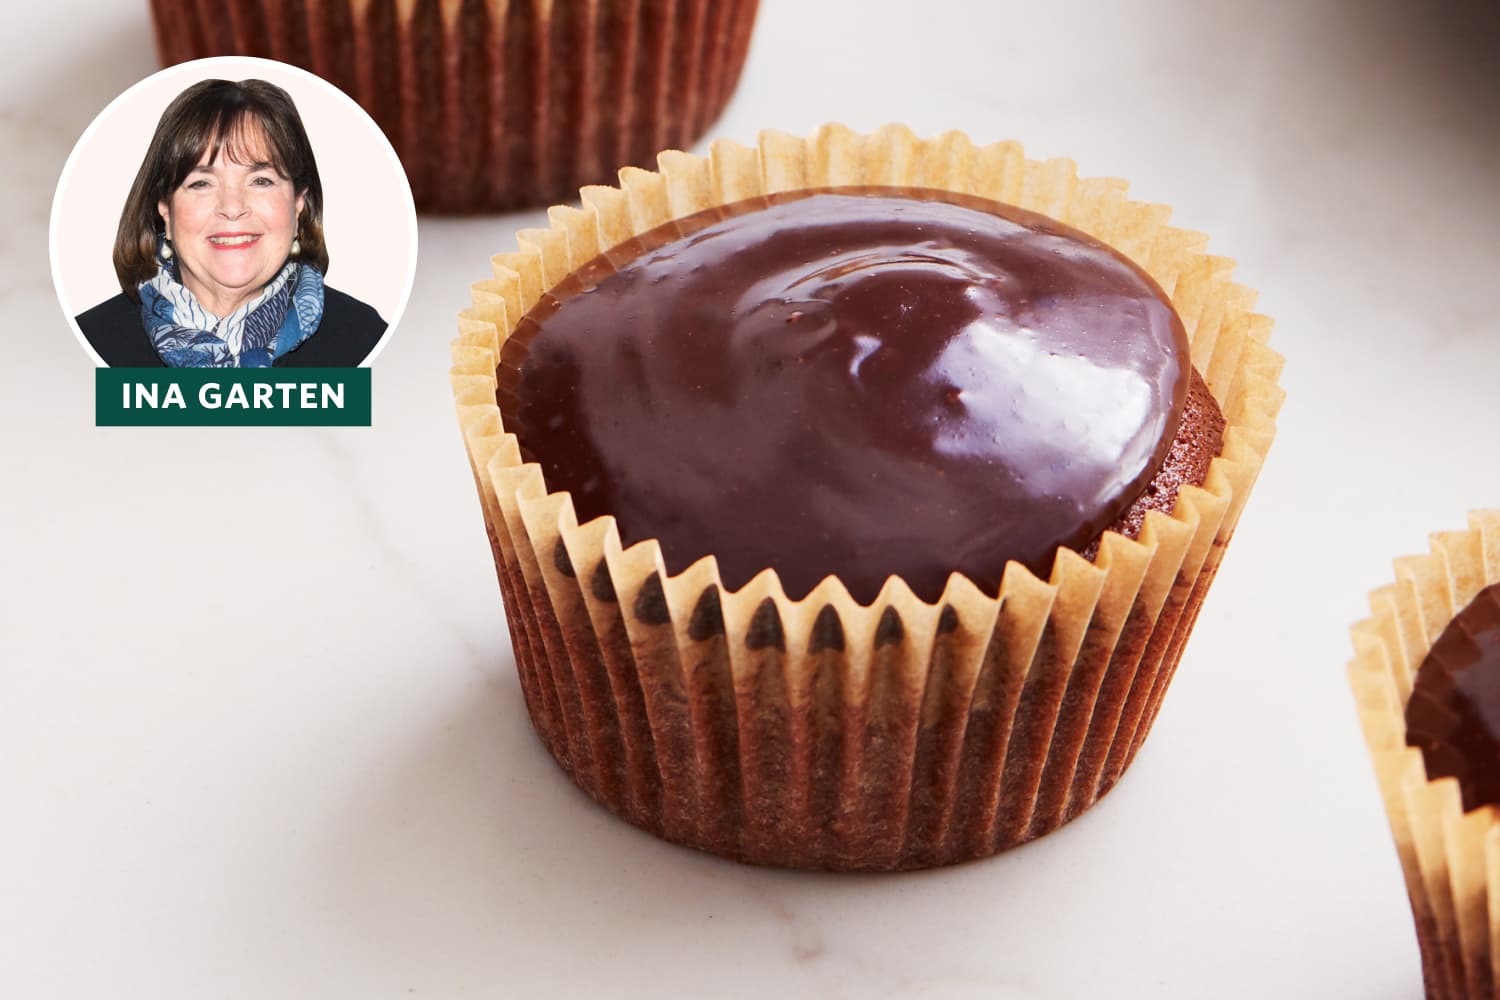 I Tried Ina Garten's Chocolate Ganache Cupcakes | The Kitchn